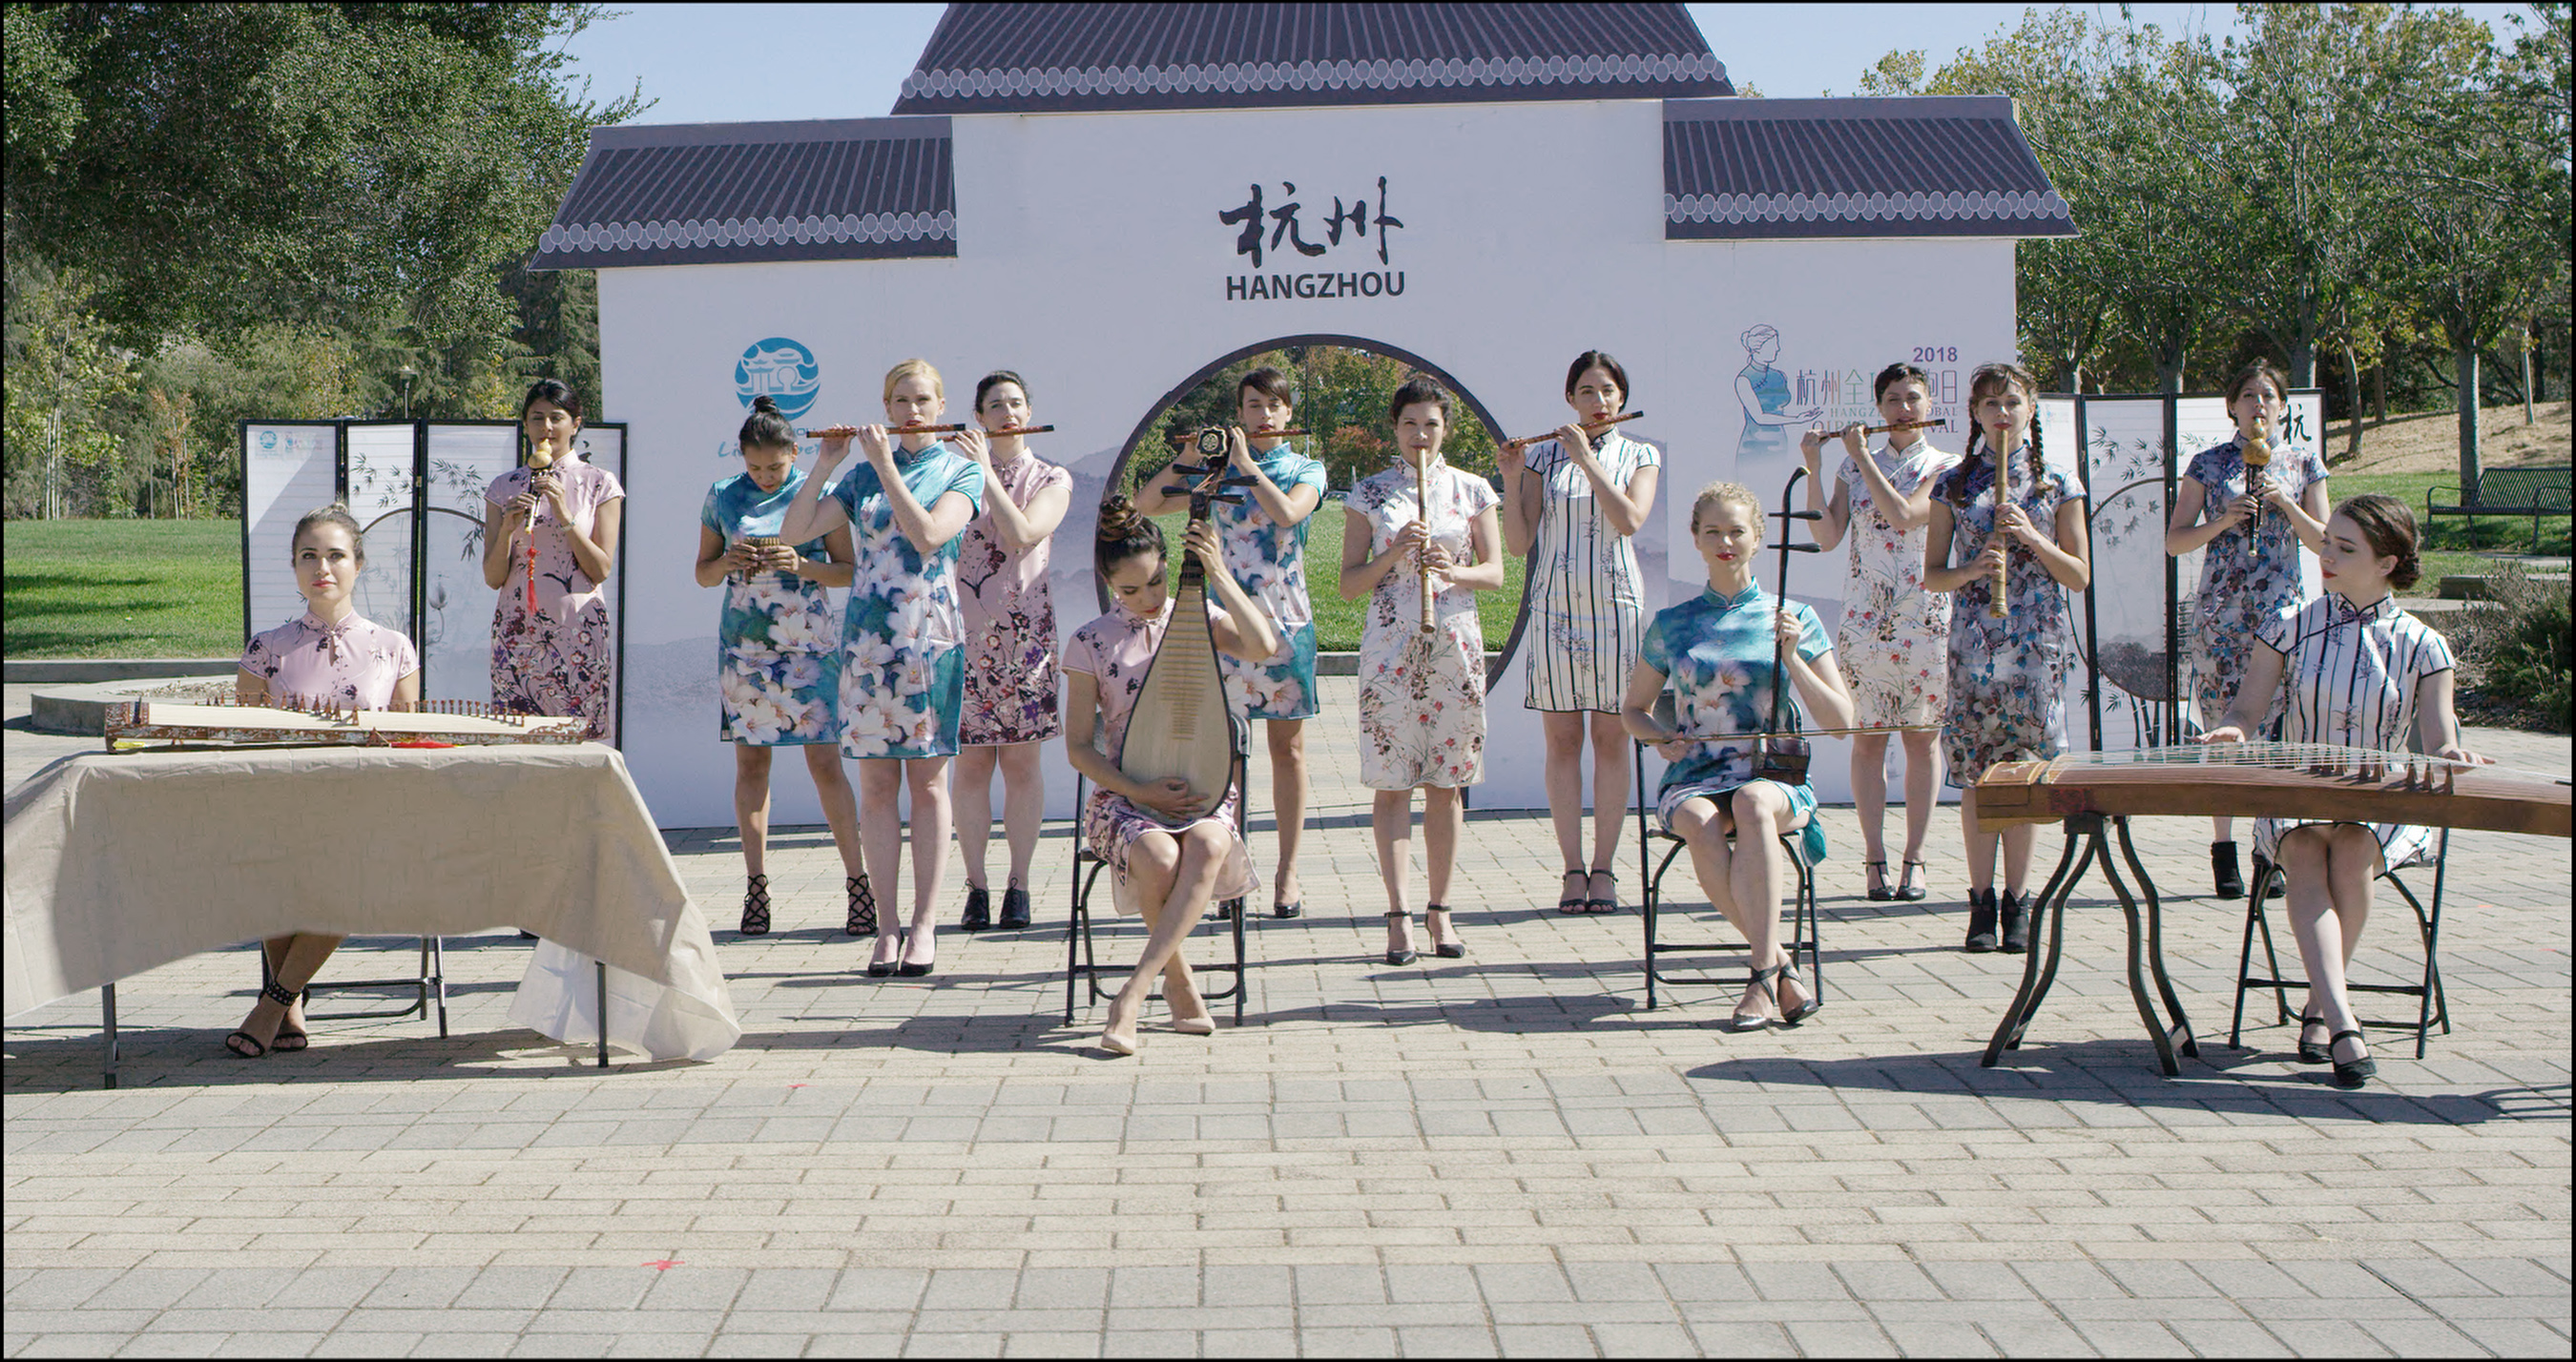 2018 Hangzhou Global Qipao Festival American Campaign